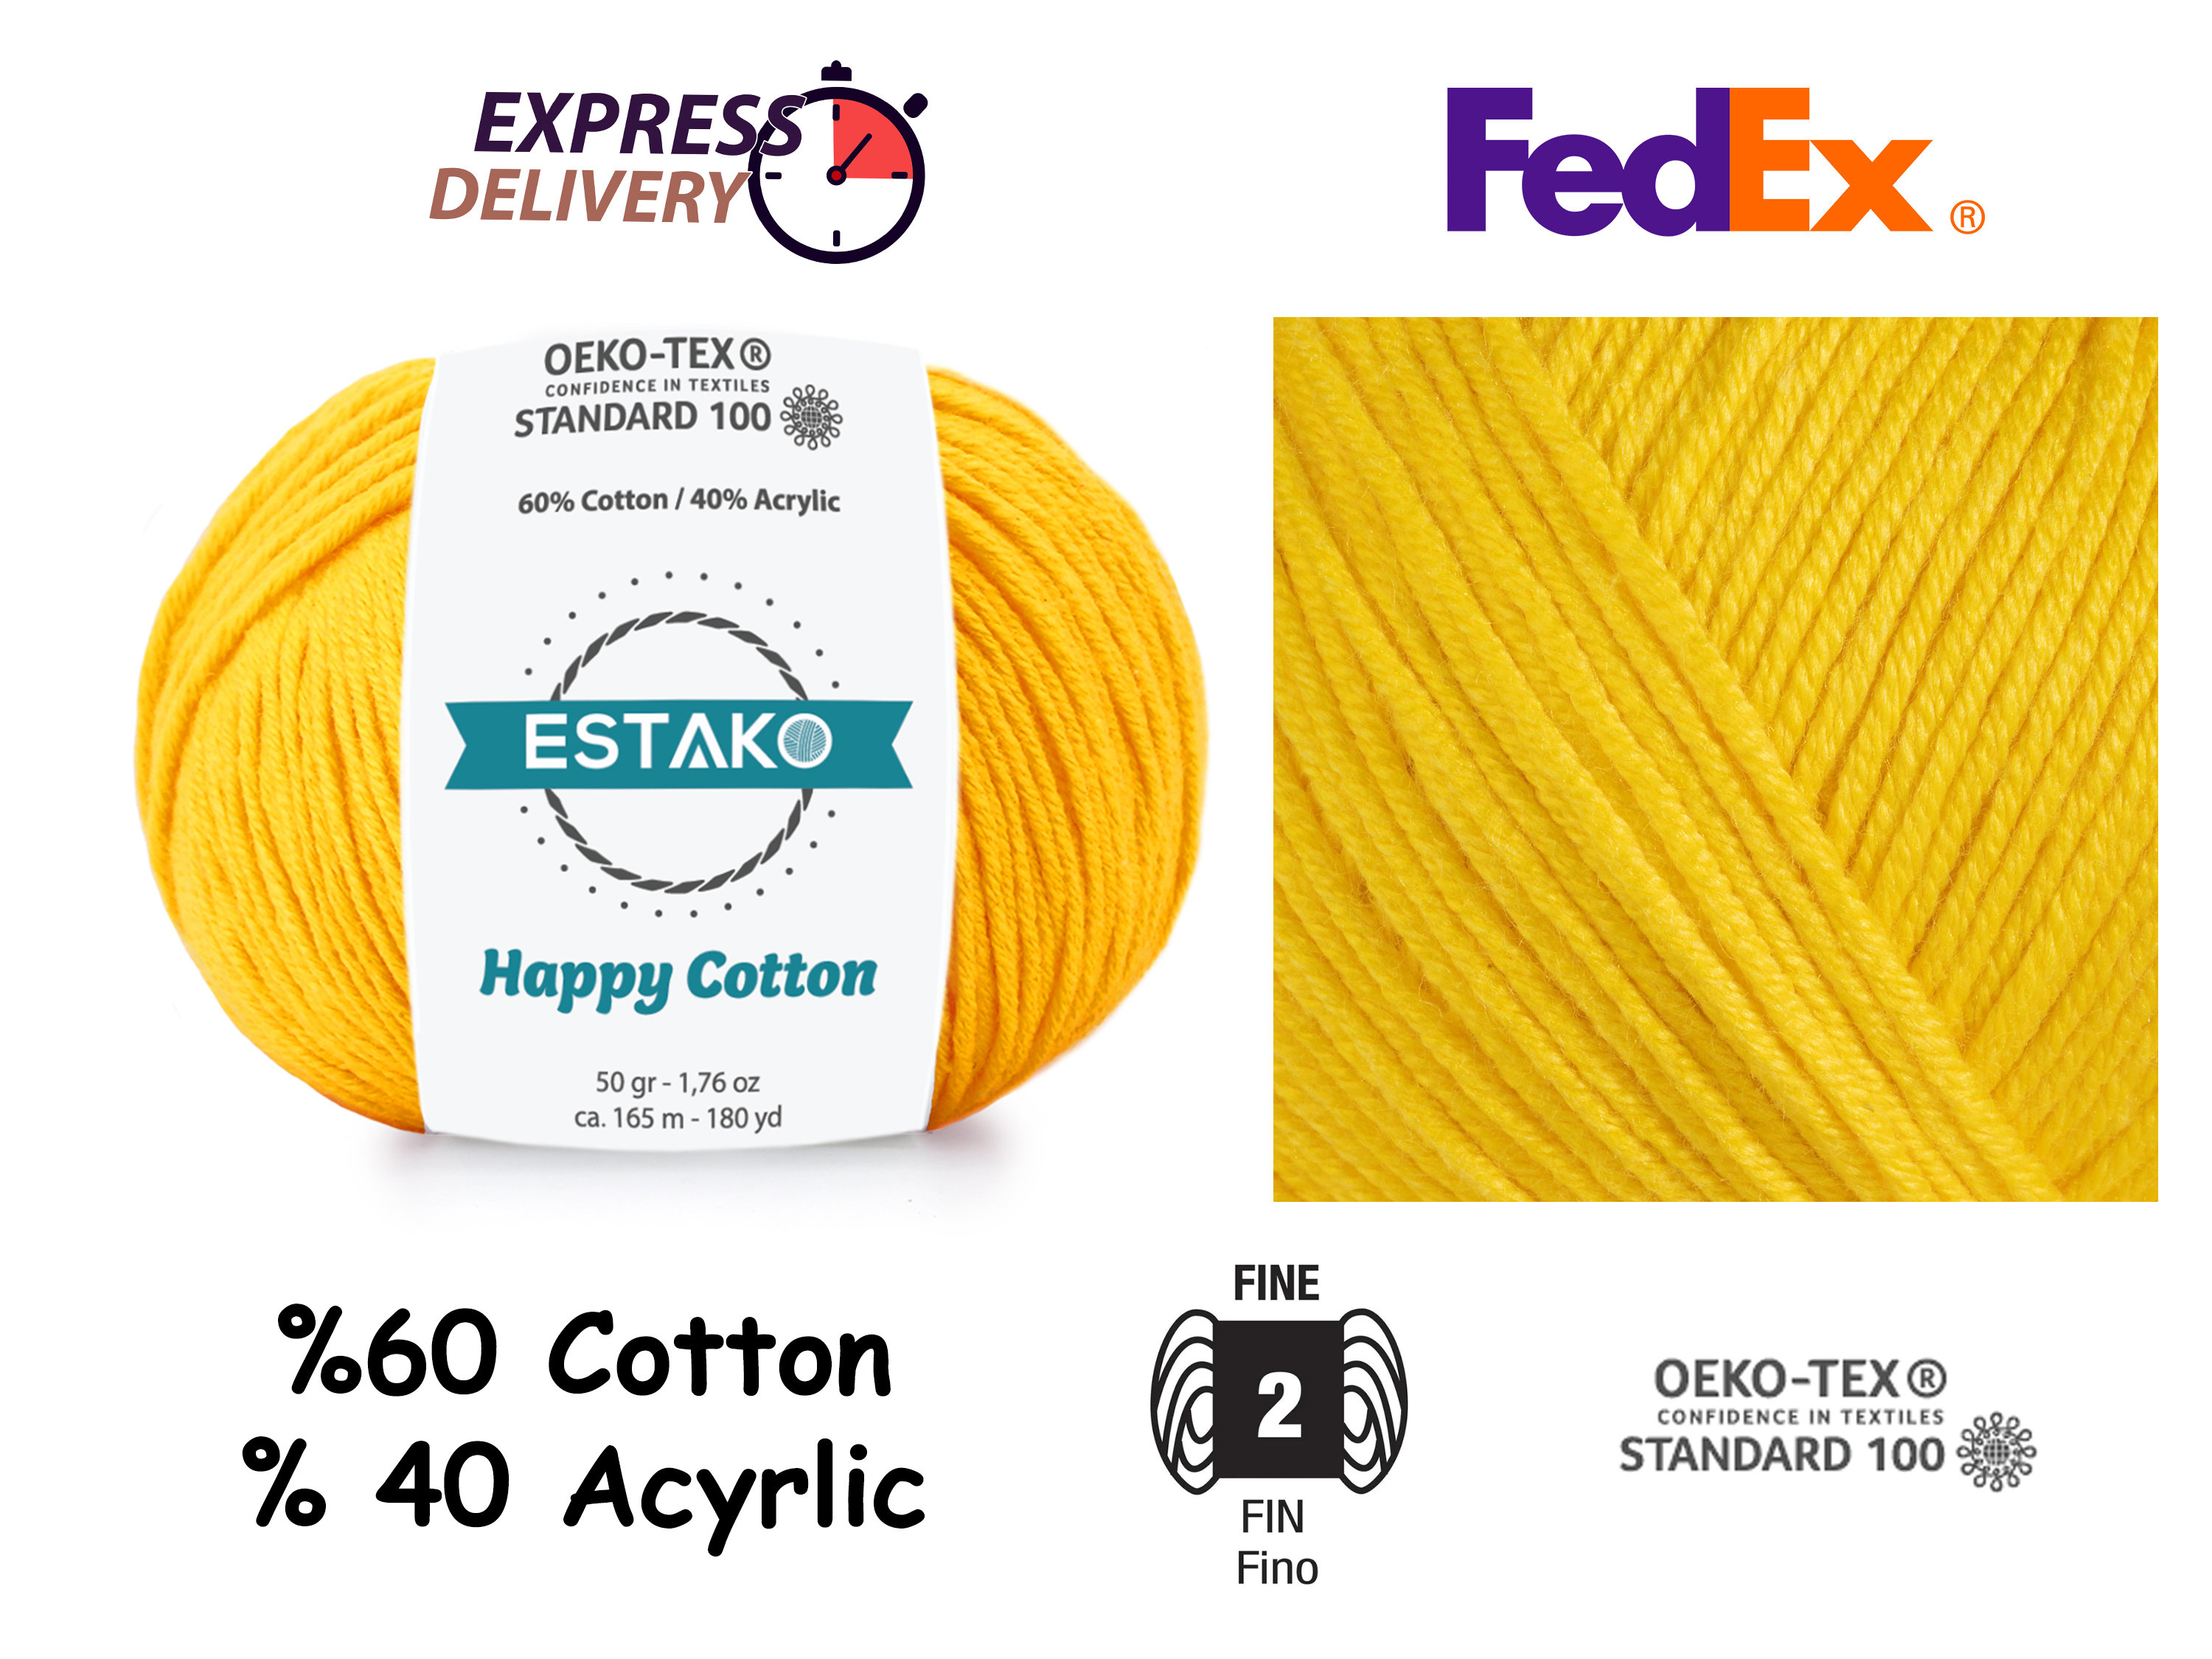 Amigurumi Crochet Yarn, Cotton Thread for Toys, DMC Happy Cotton, Mini  Cotton Balls 